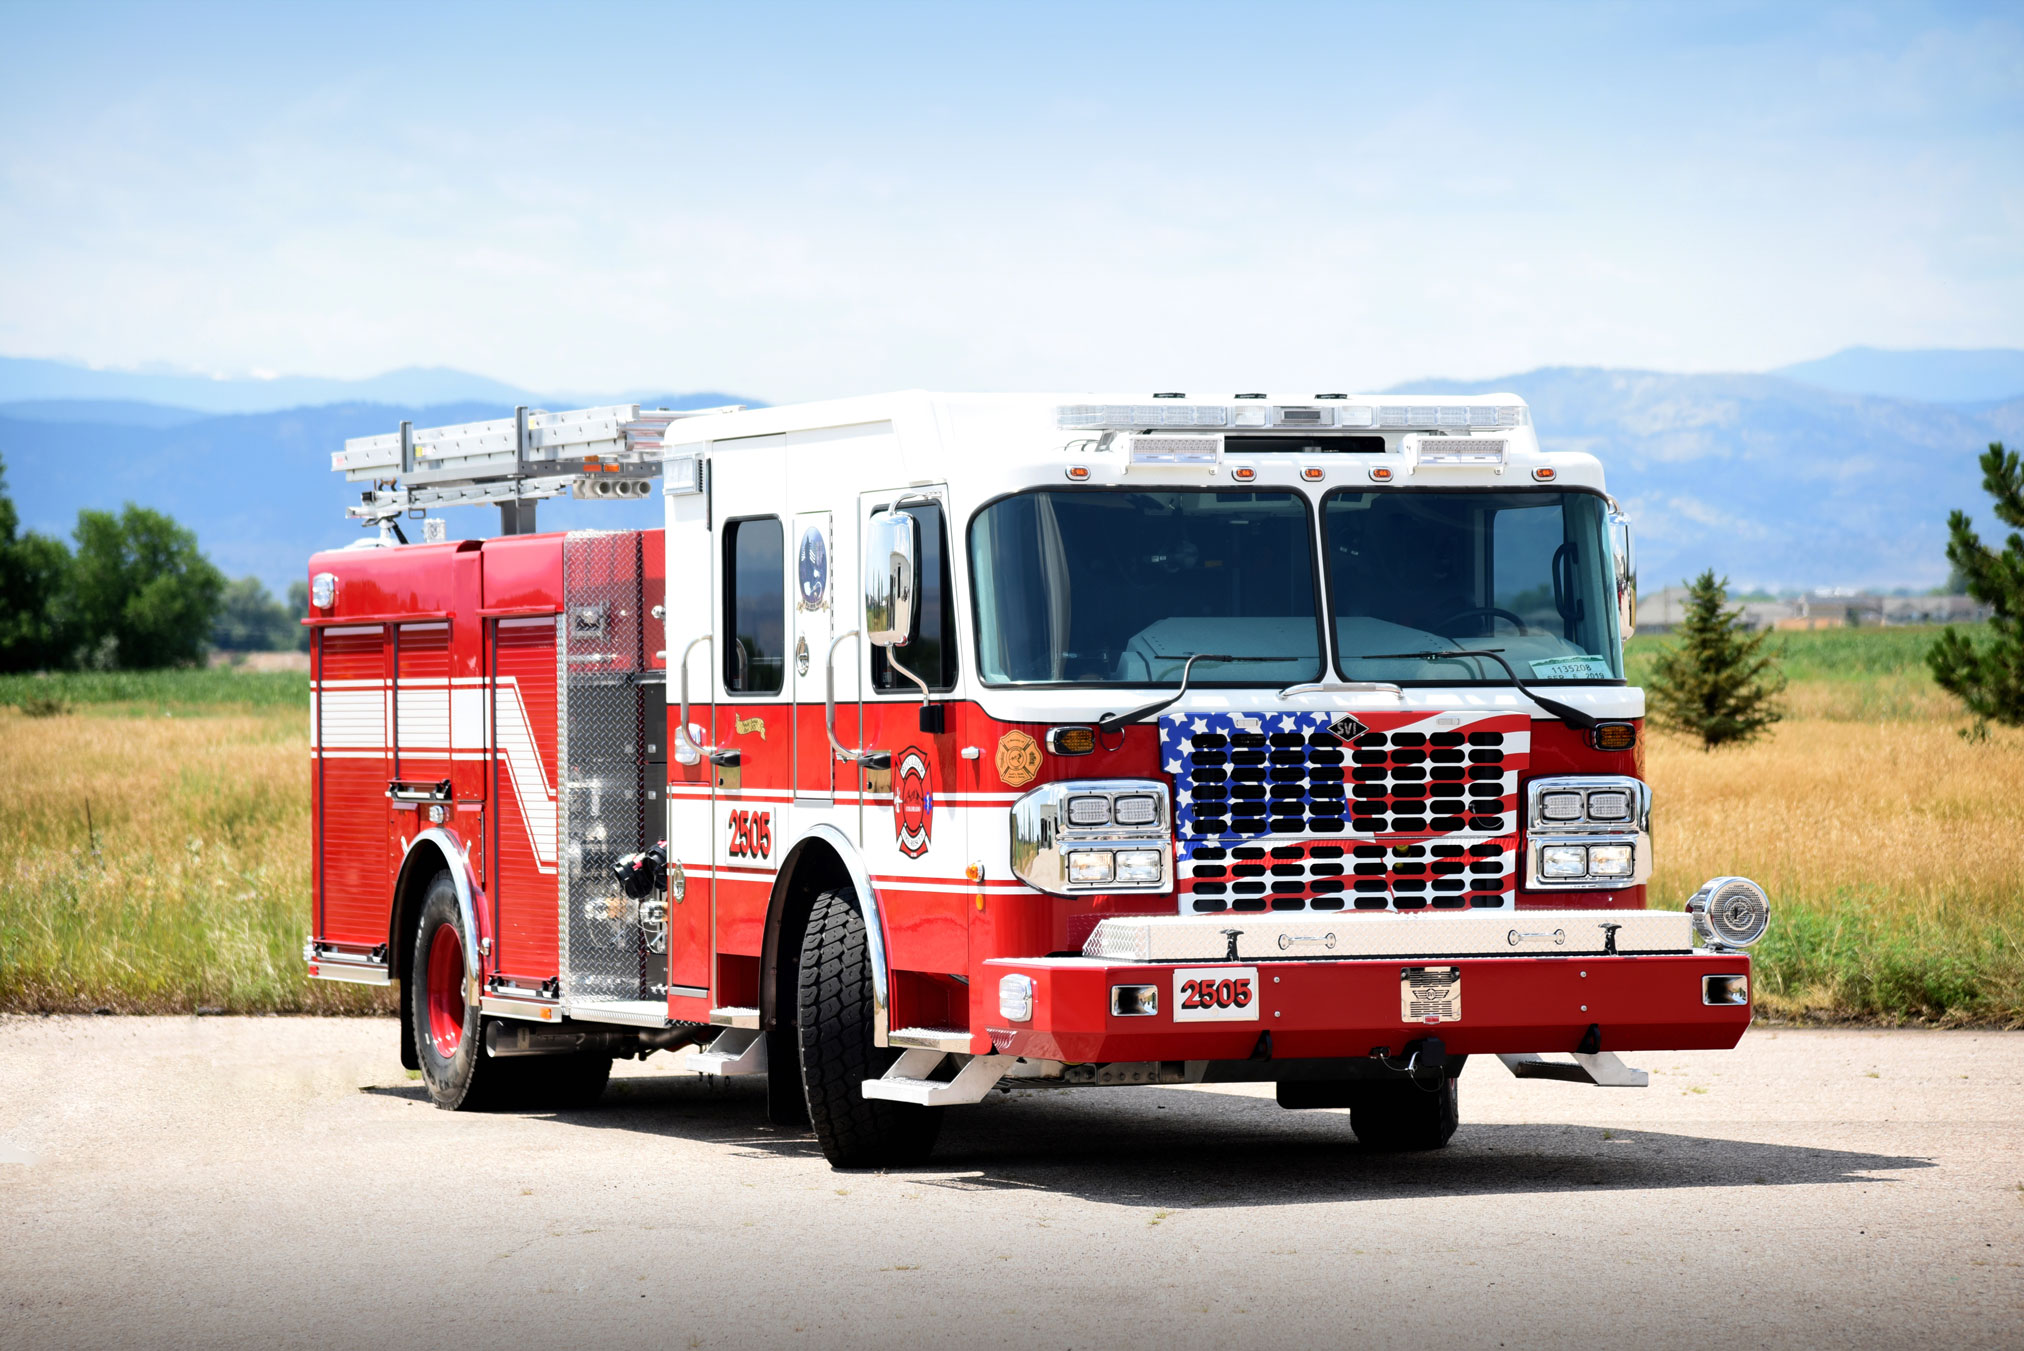 Featured image for “Boulder, CO Rescue Pumper #1088”